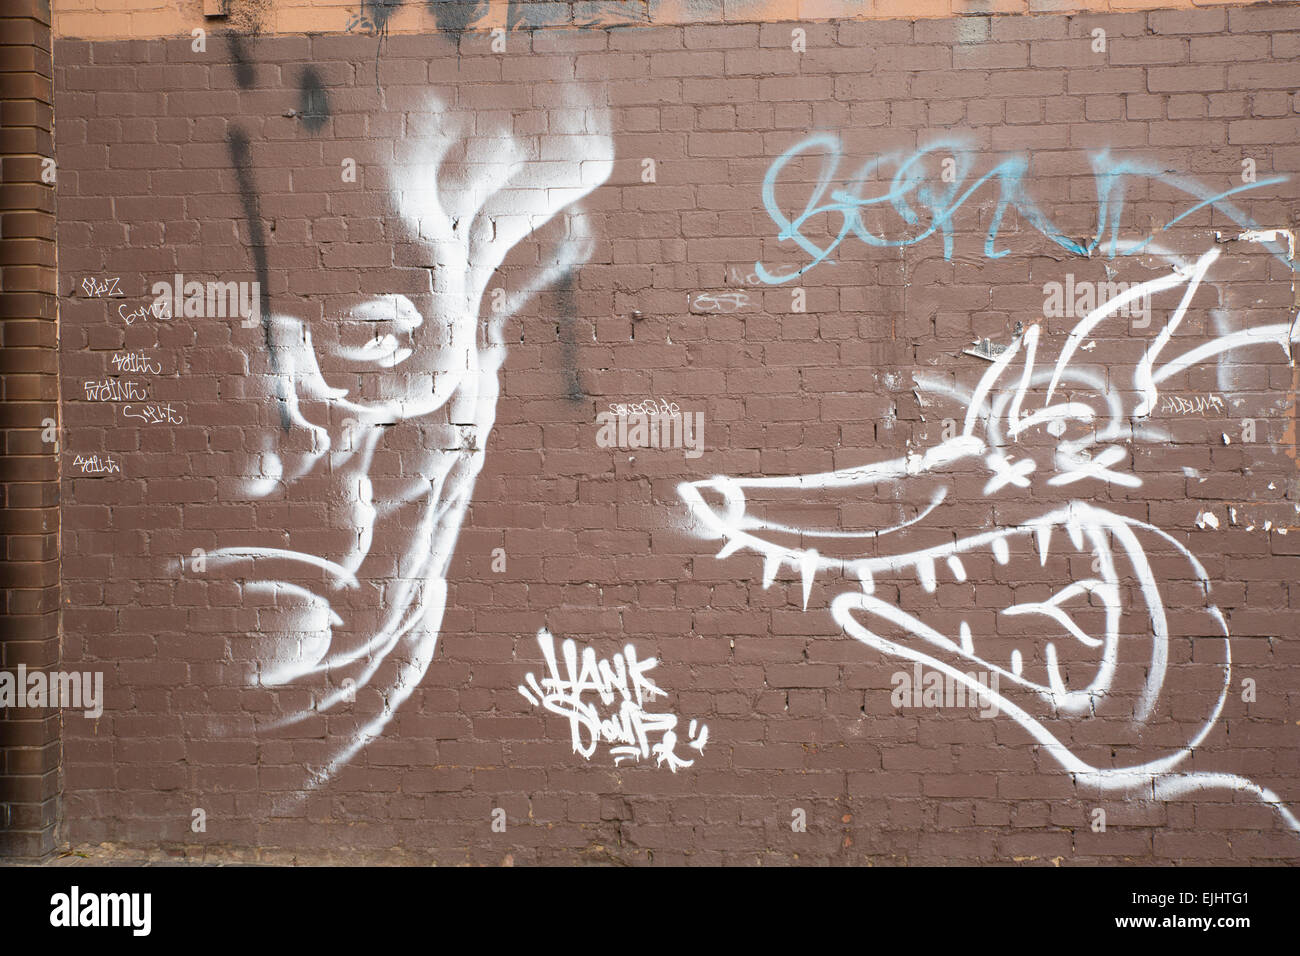 Graffiti - Wangaratta Street, East Richmond, Melbourne, Australia. Image taken on March 22nd 2015. Stock Photo